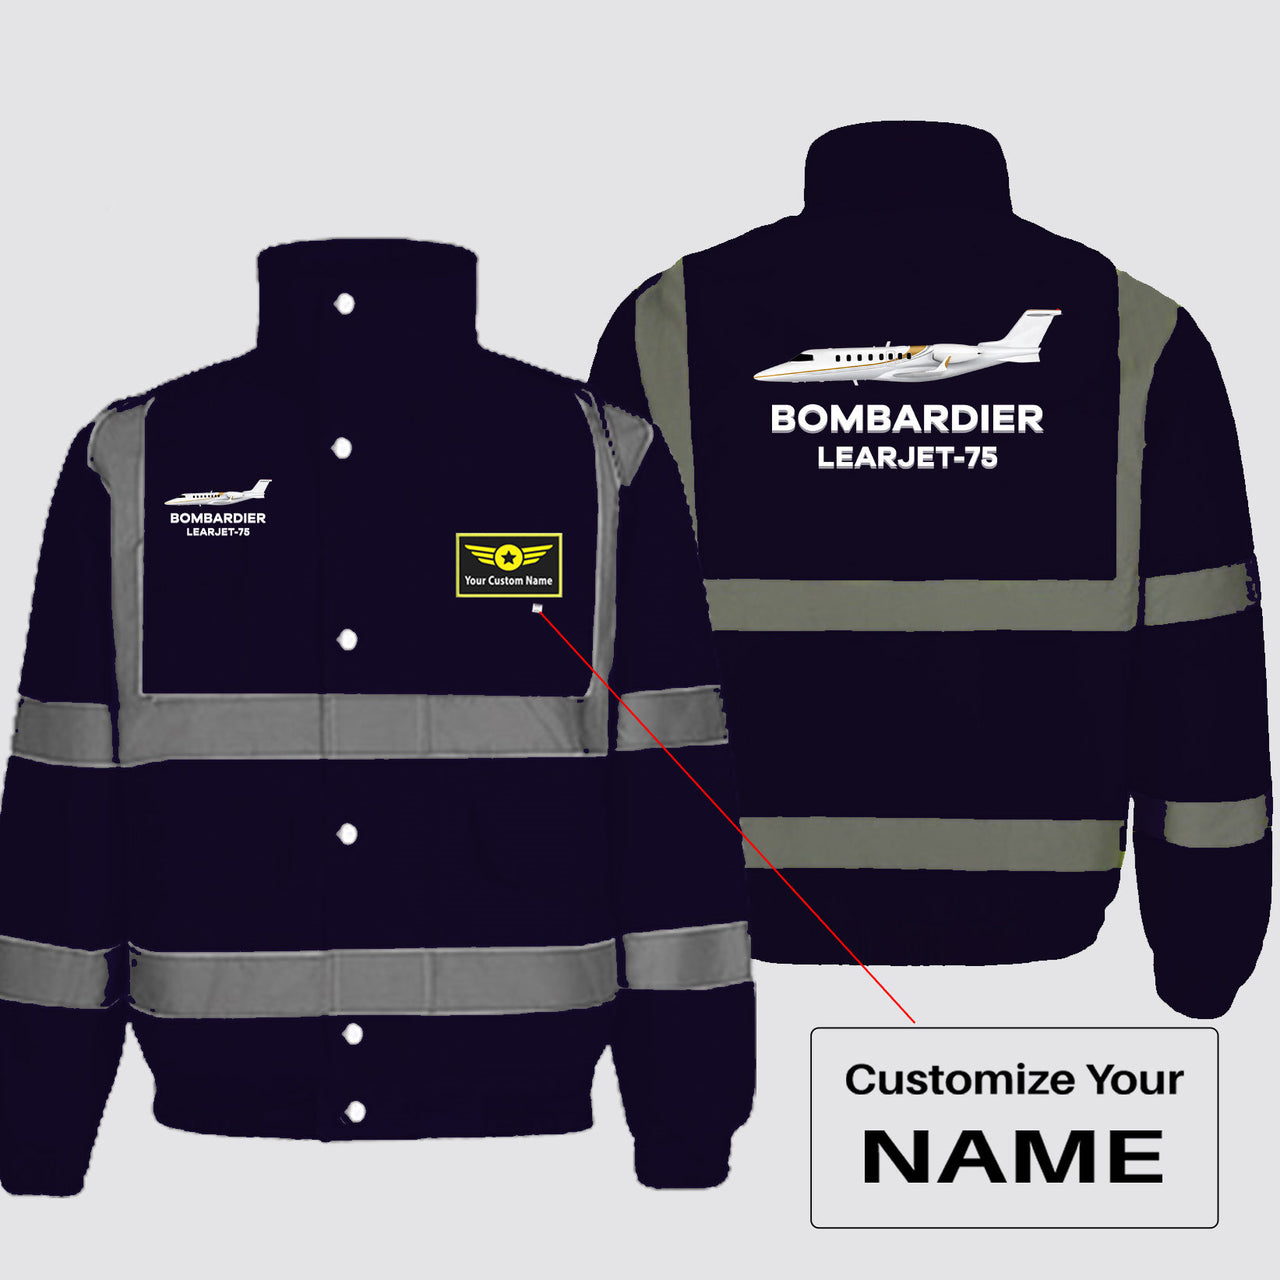 The Bombardier Learjet 75 Designed Reflective Winter Jackets